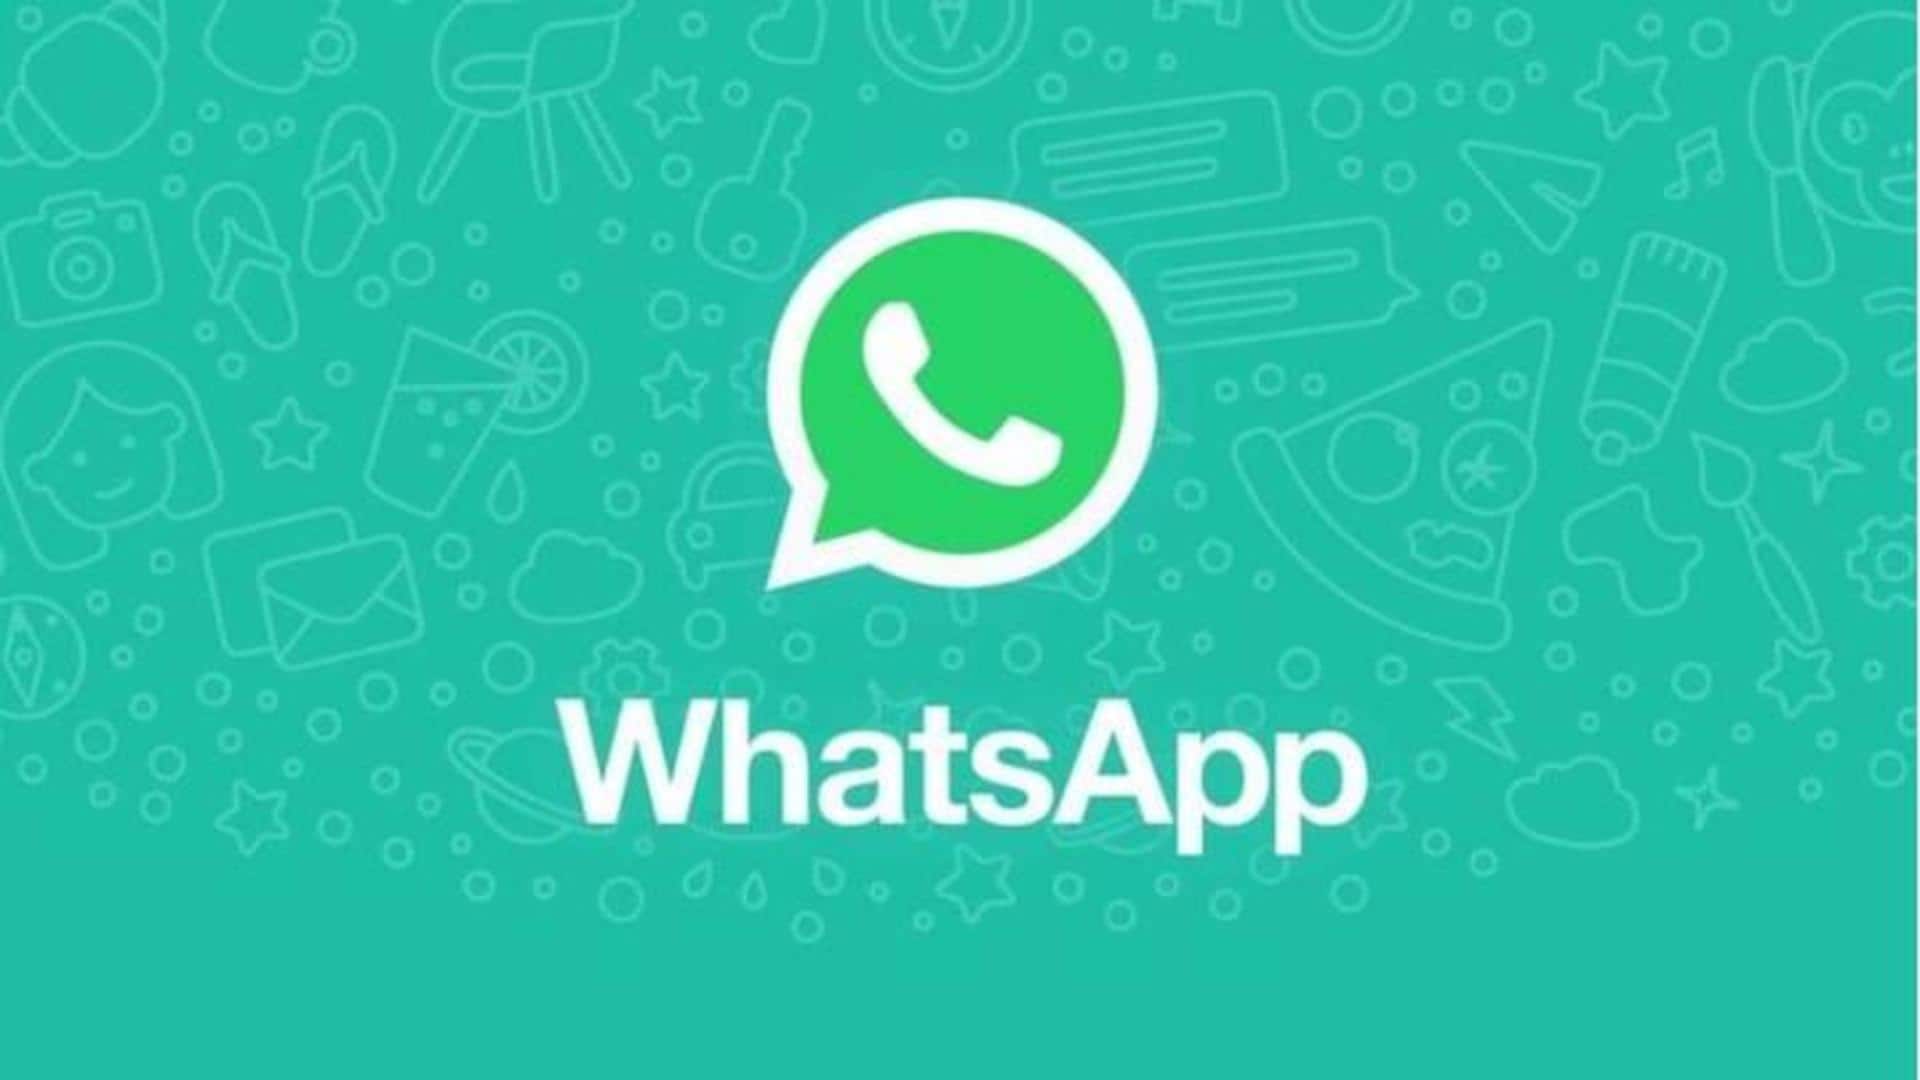 WhatsApp Desktop app to get new screen lock feature